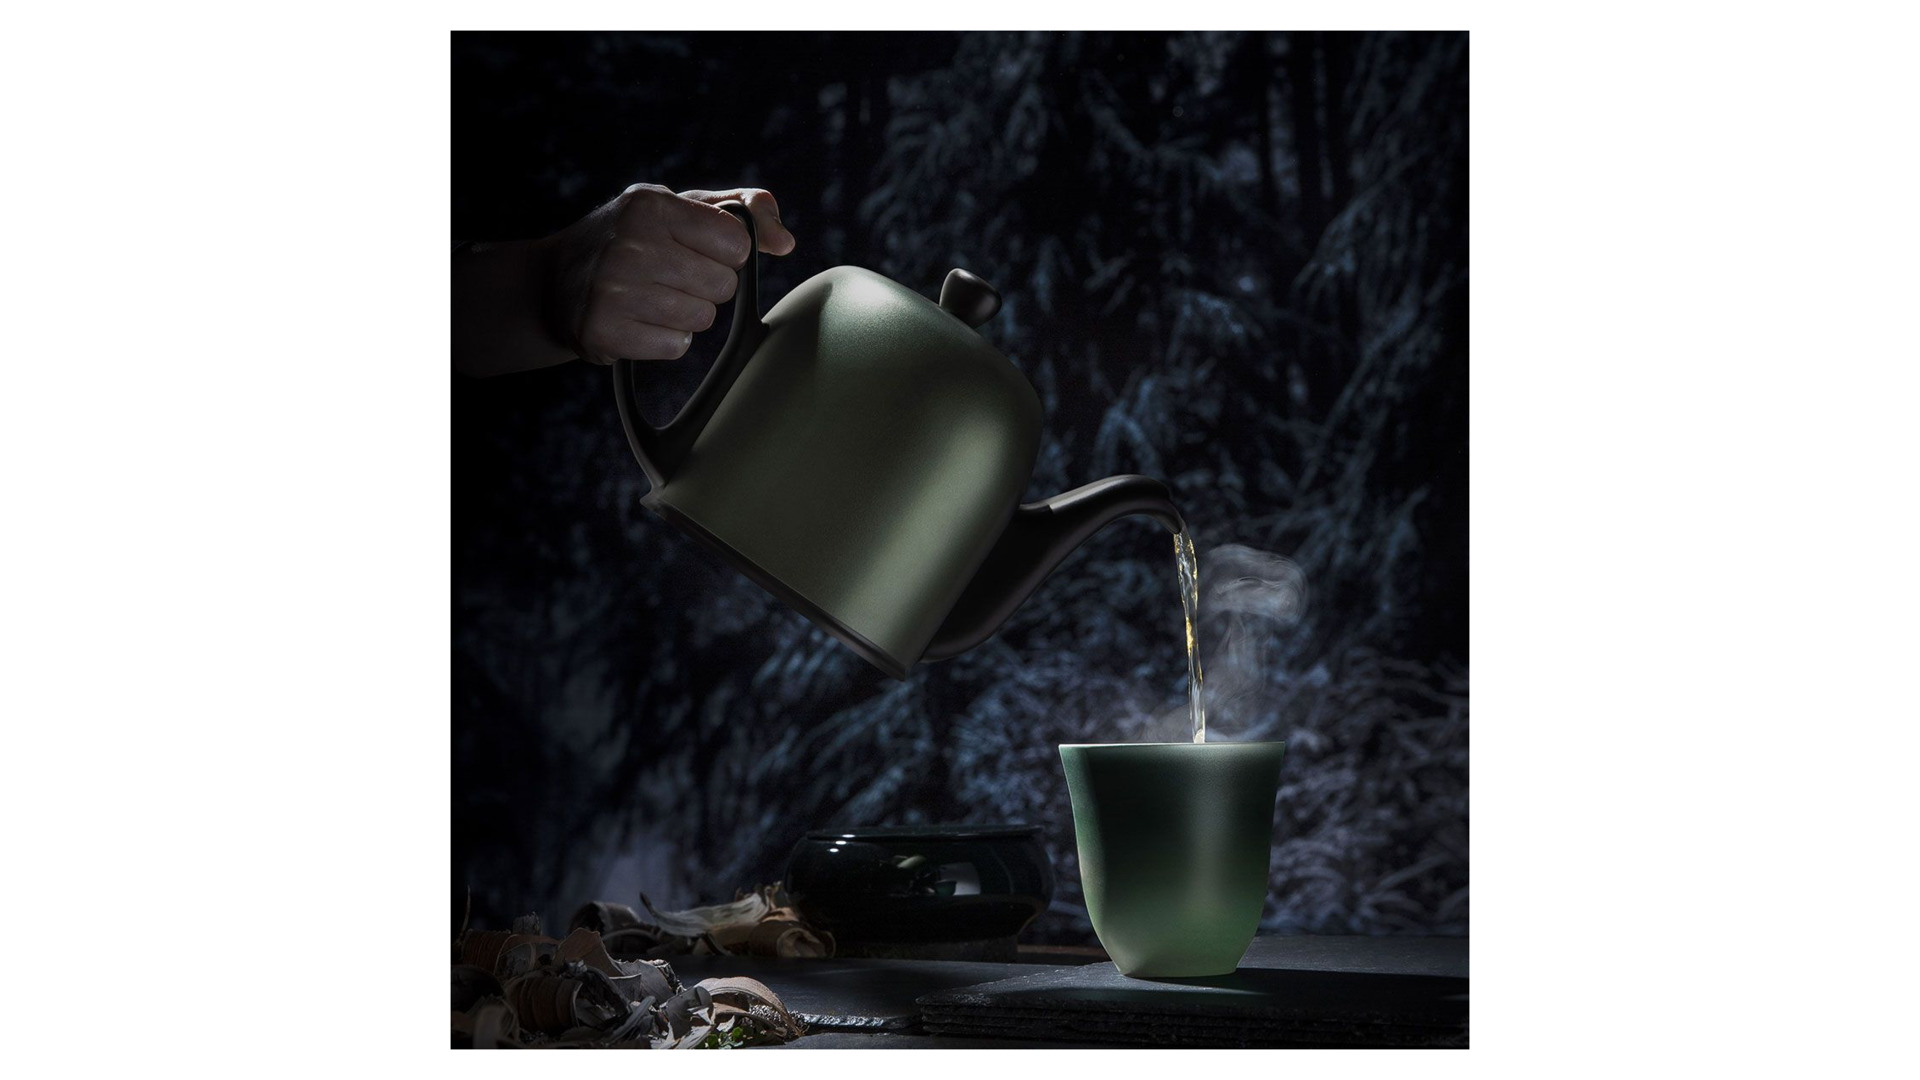 Набор чайный Degrenne Salam 3 предмета, чайник 700 мл, кружка 250 мл 2 шт, фарфор, зеленый, п/к